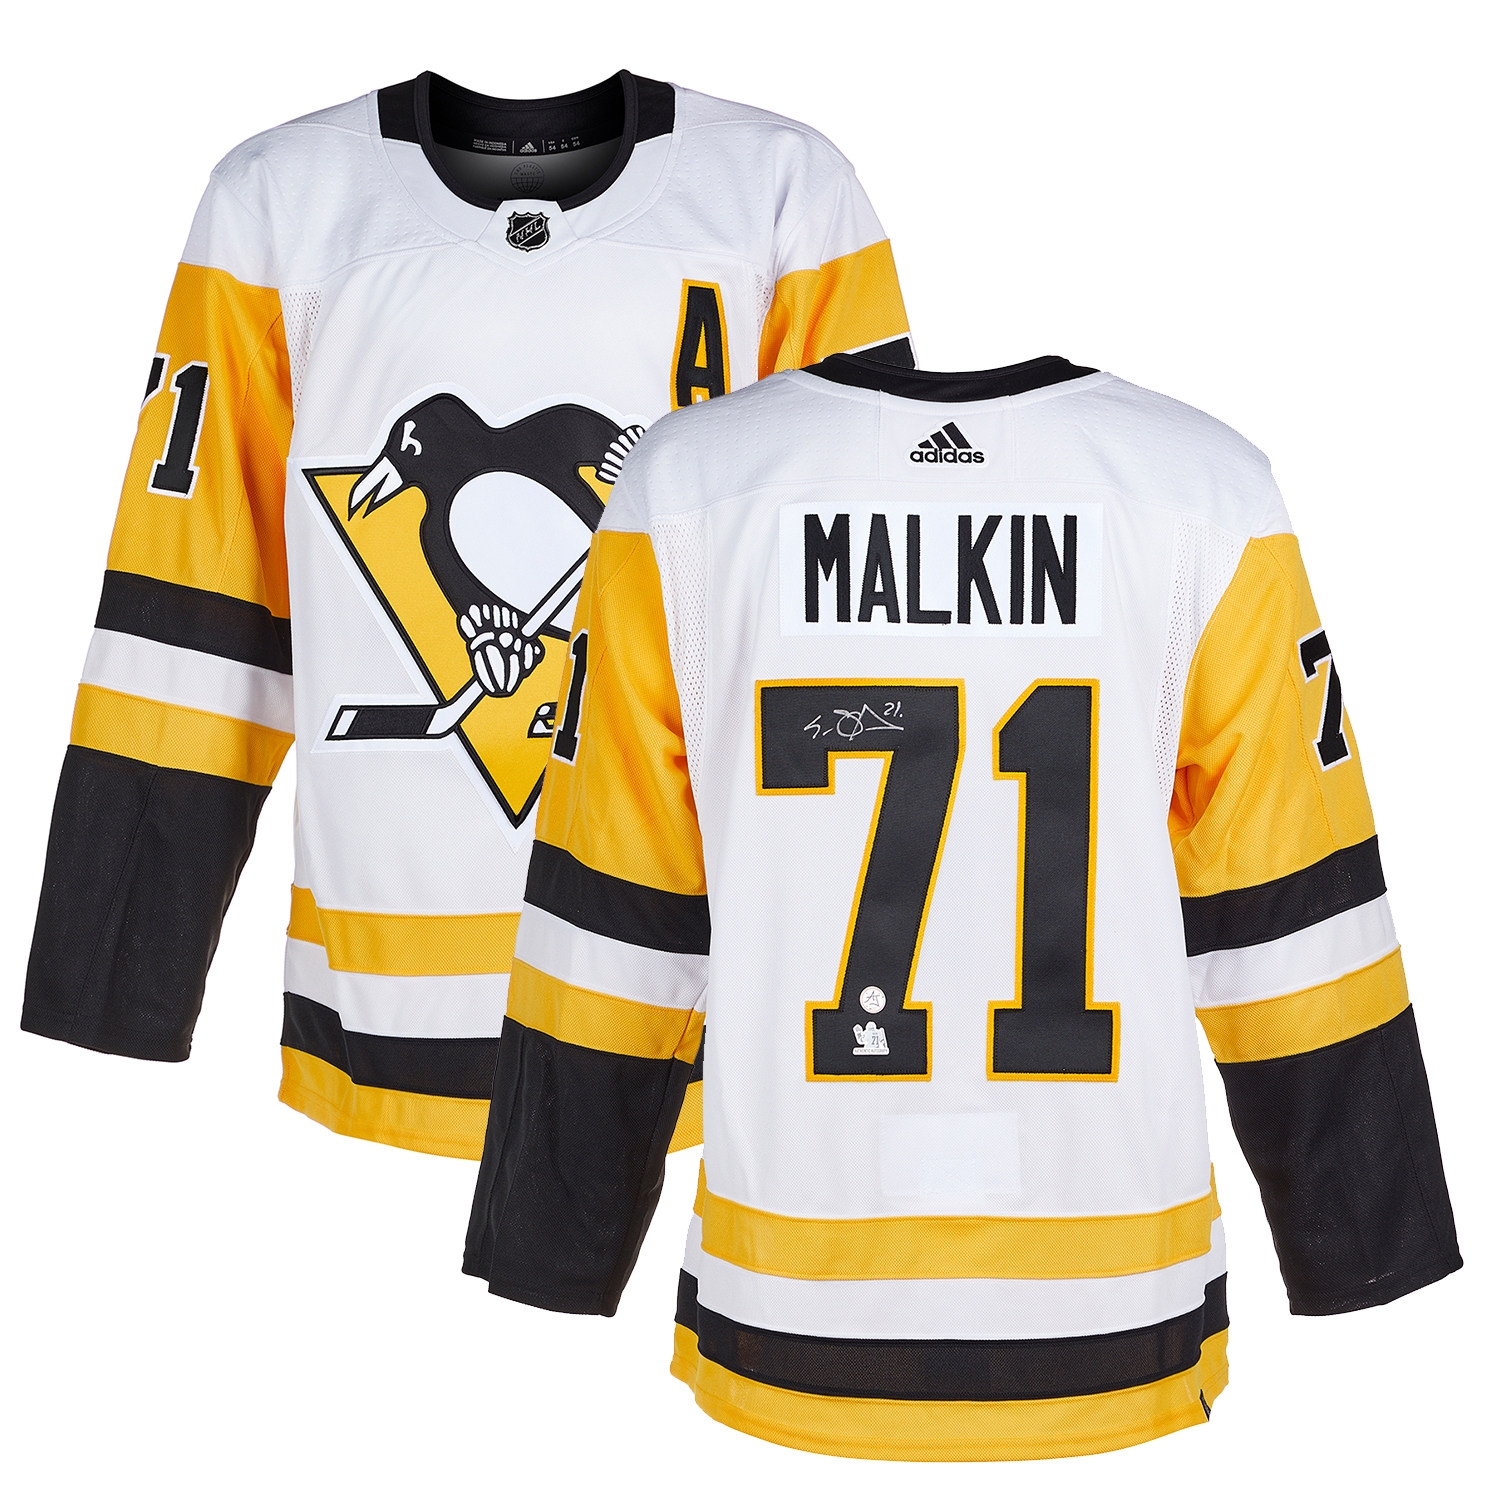 Evgeni Malkin Signed Pittsburgh Penguins White adidas Jersey